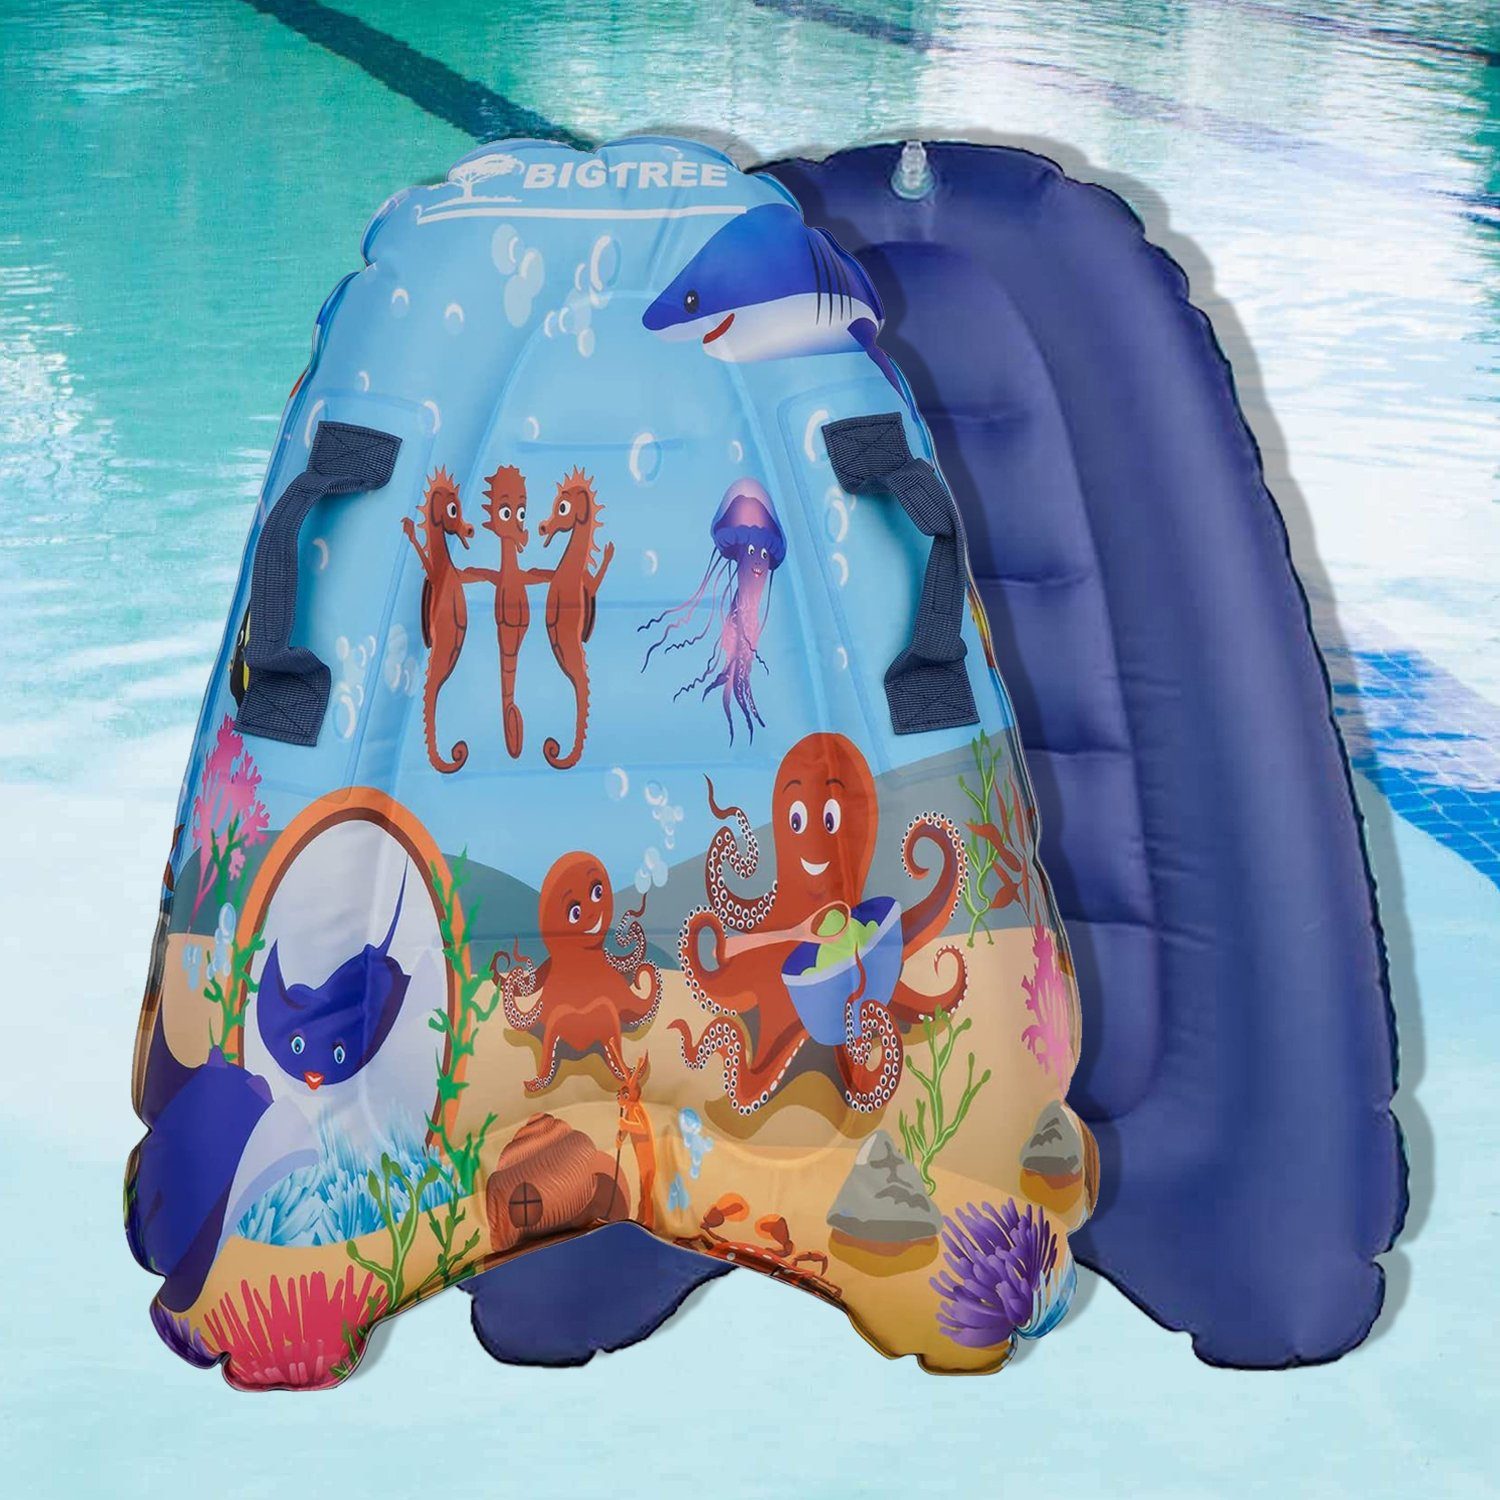 KAHOO Inflatable SUP-Board Aufblasbares Bodyboard, 52x14x70cm, Schwimmhilfe Meeresfauna